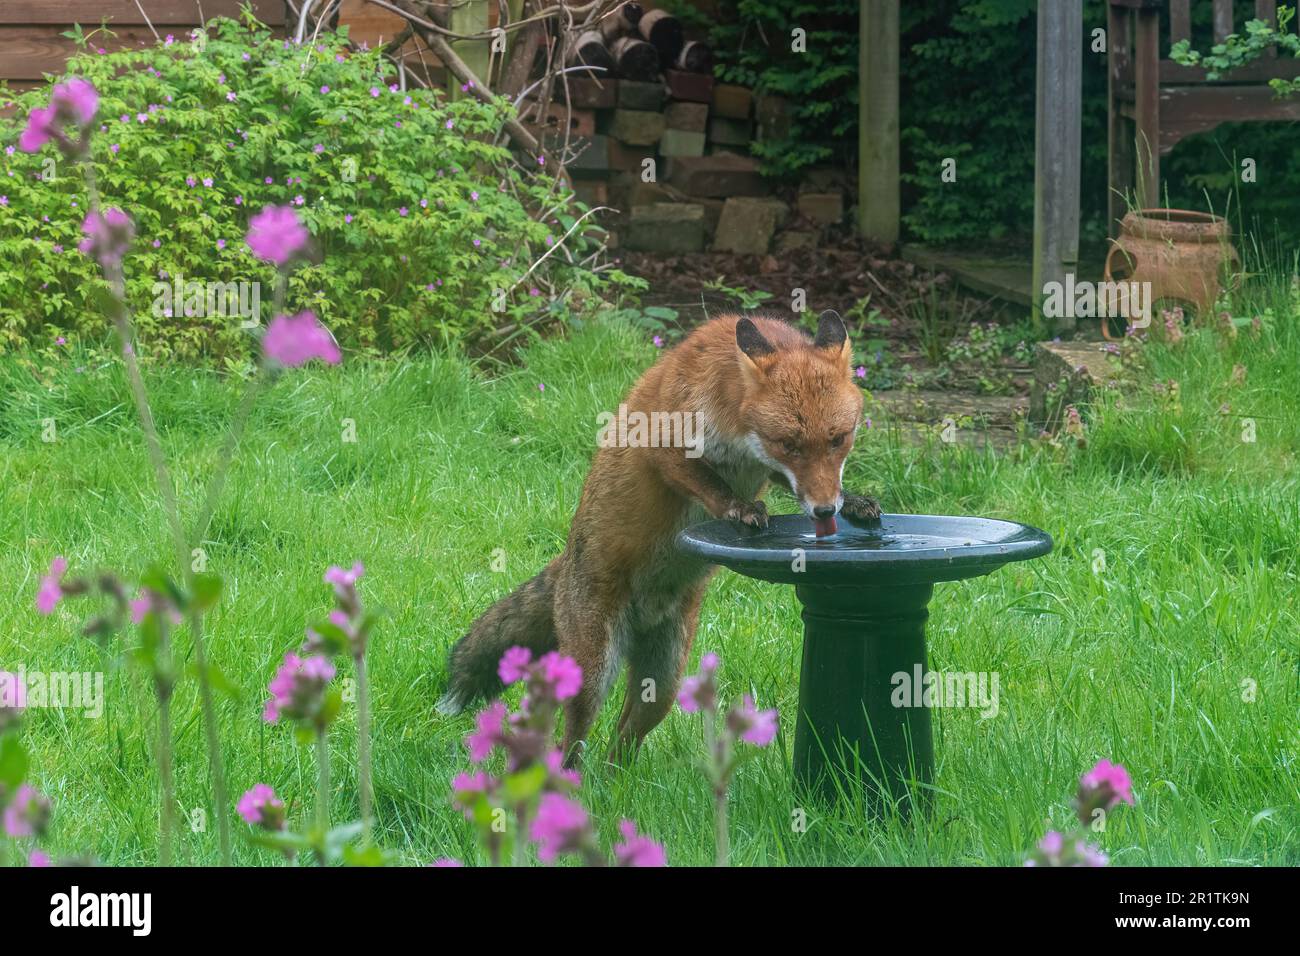 Urban fox (Vulpes vulpes, red fox) drinking water from a bird bath in a garden, England, UK. Garden wildlife Stock Photo